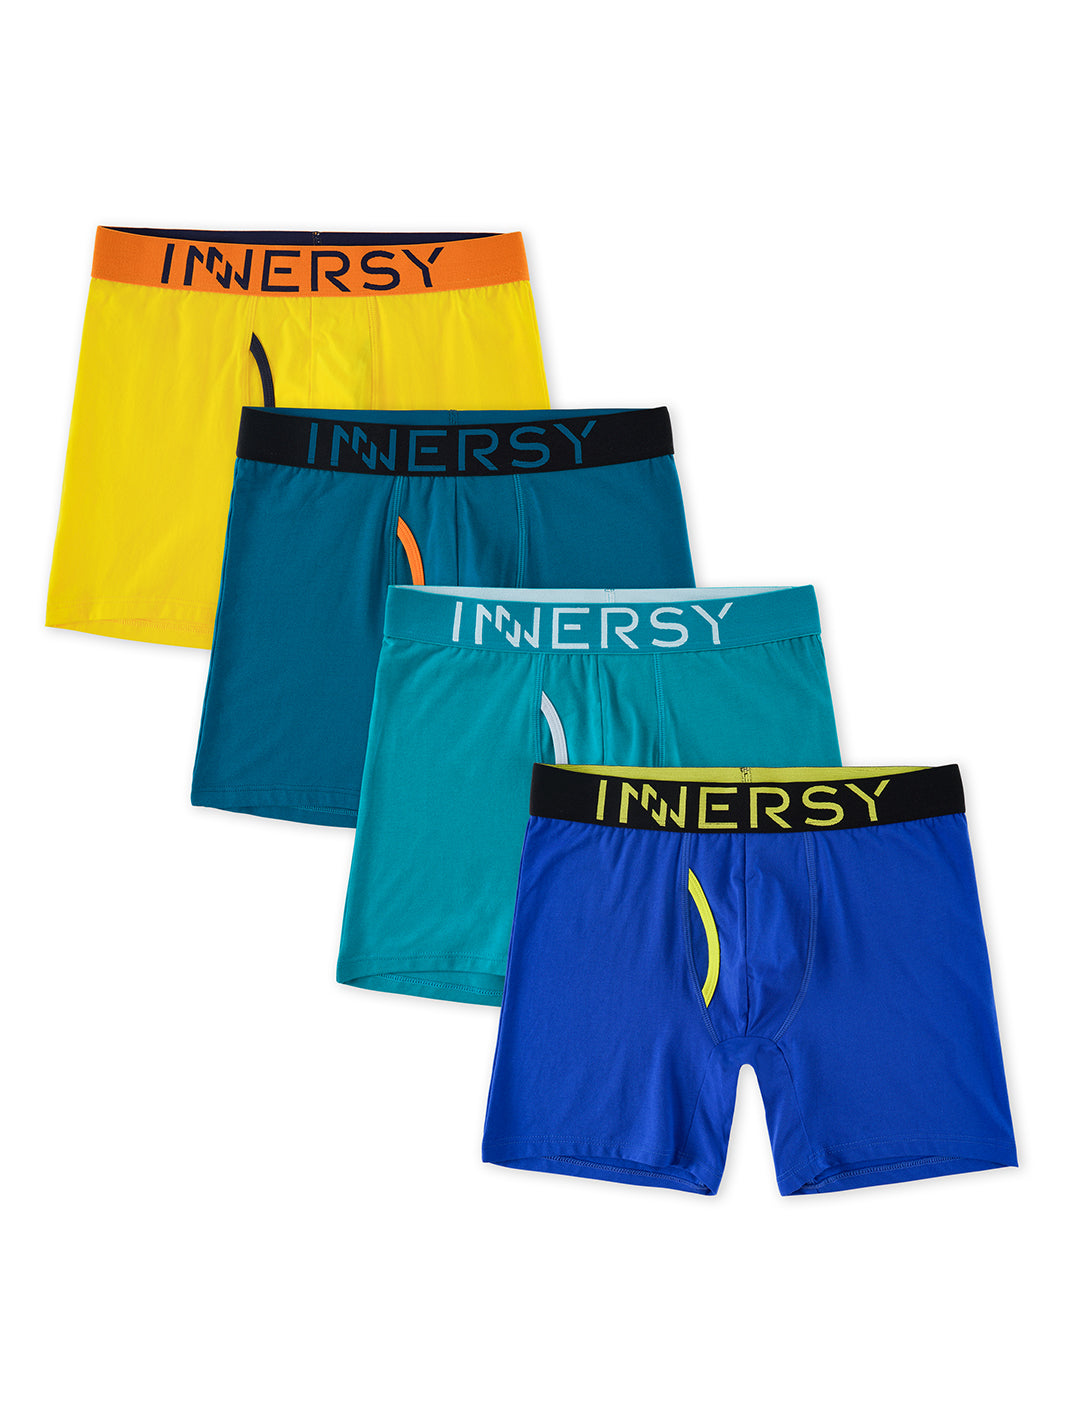 INNERSY Boys Underwear Stretchy Cotton Soft Boxer Brazil